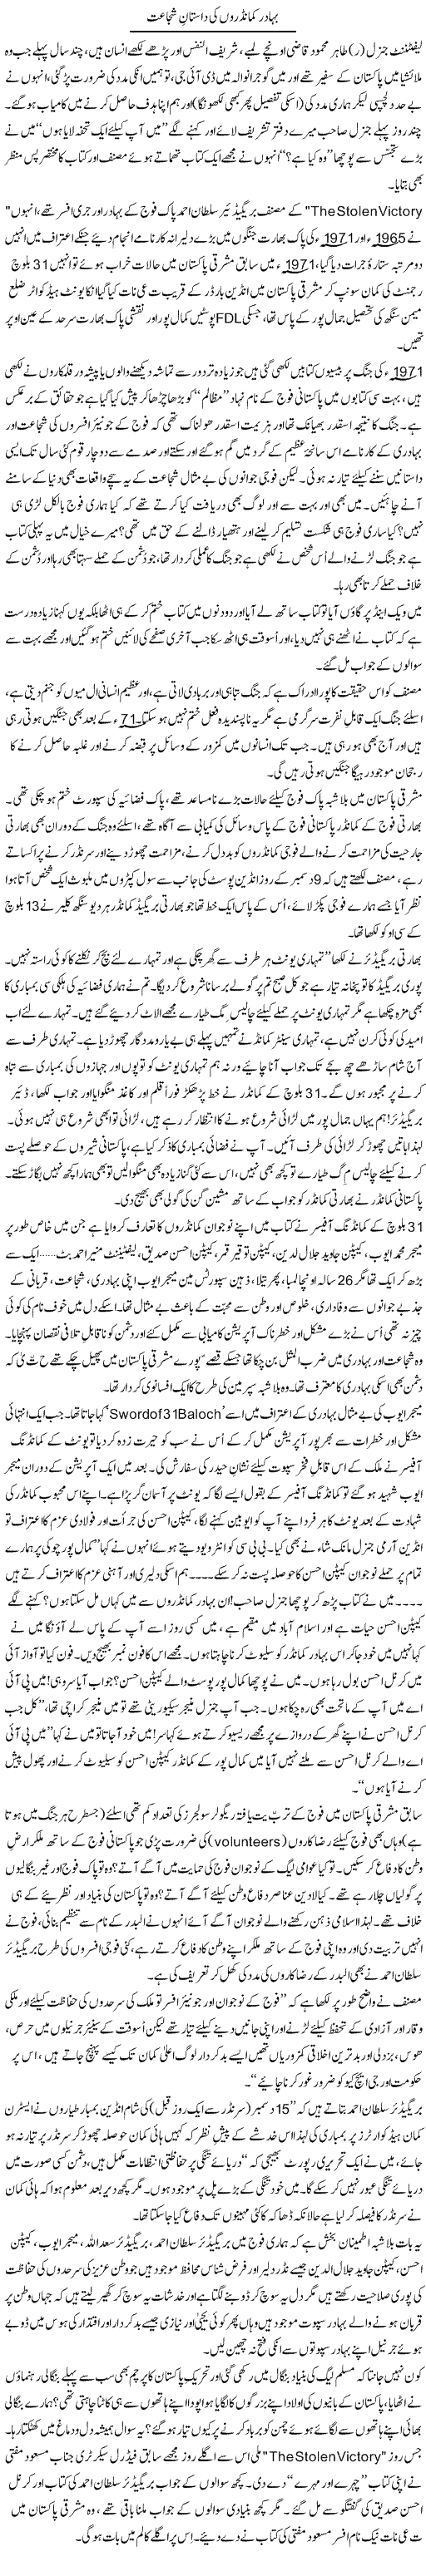 Bahadur Comandron Ki Dastan Shujaat | Zulfiqar Ahmed Cheema | Daily Urdu Columns